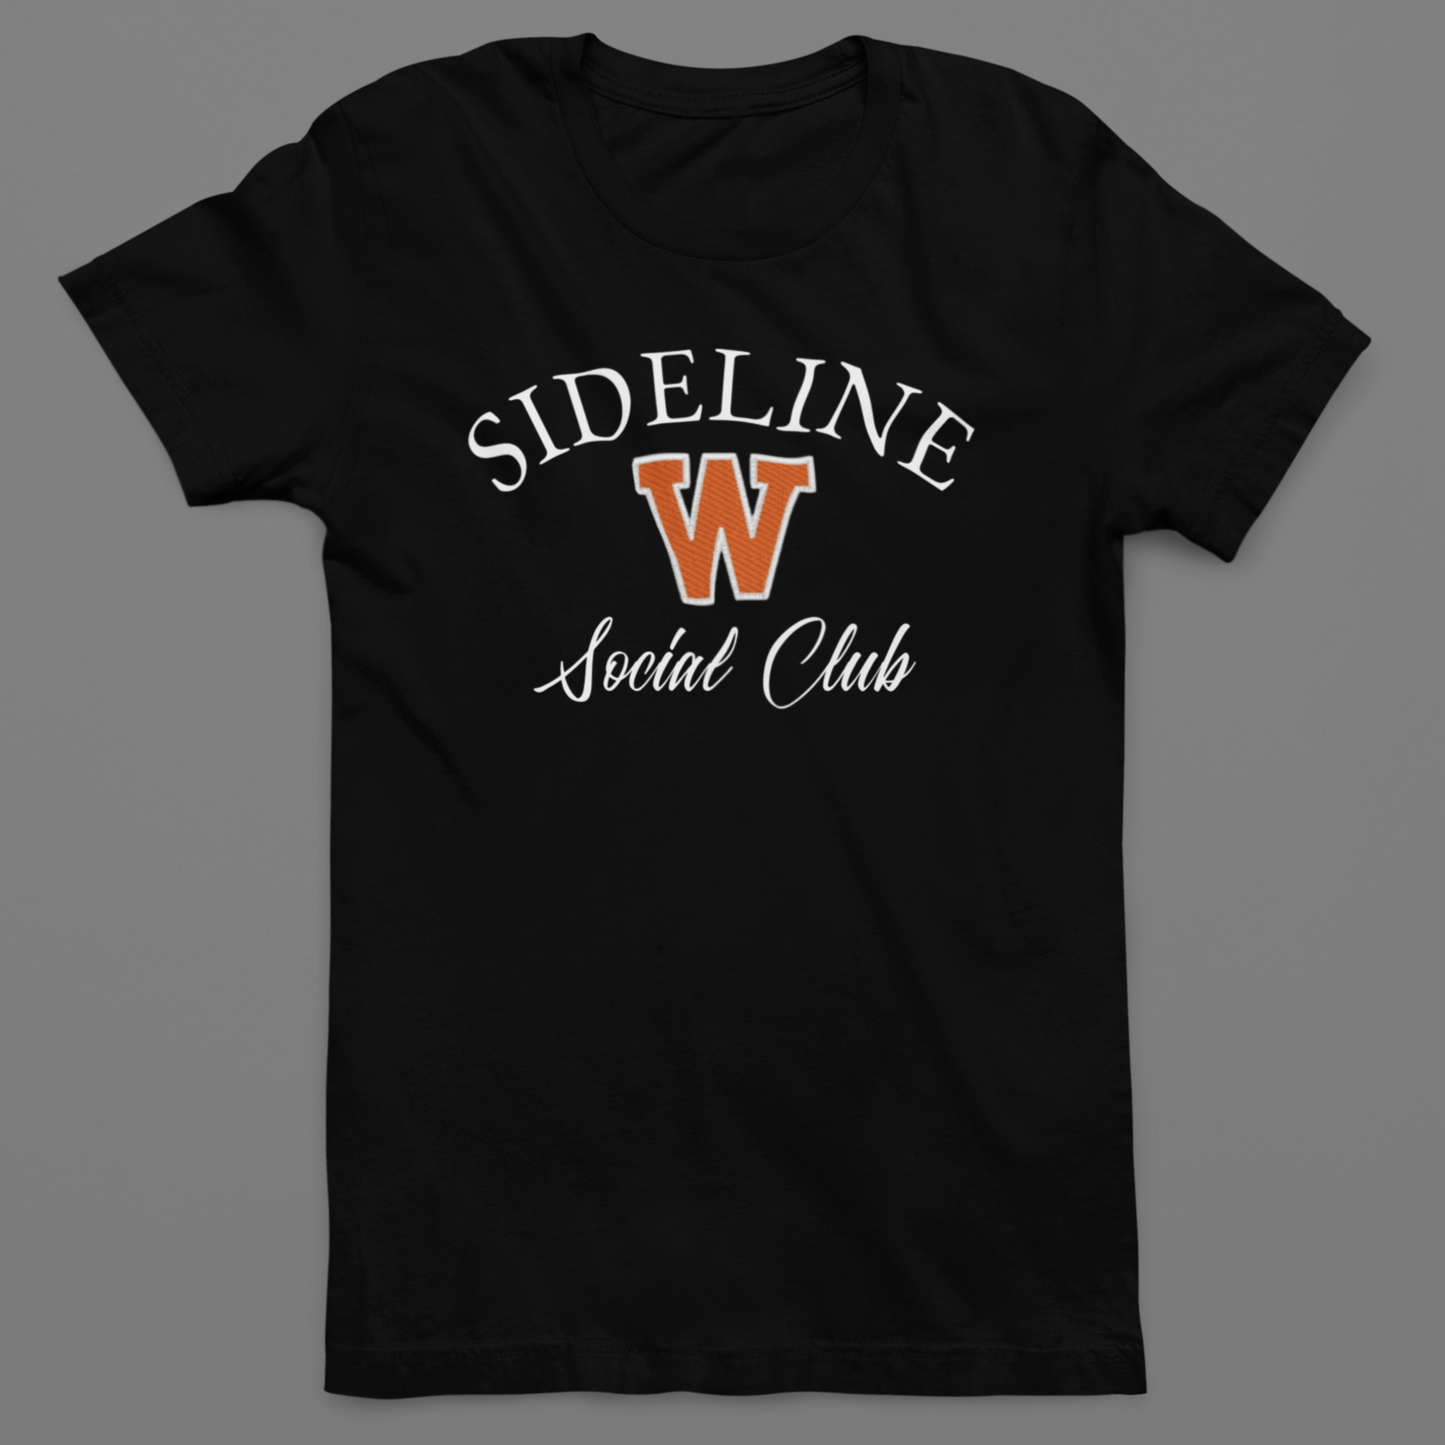 West De Pere Schools "Sideline Social Club" Black Tee Shirt